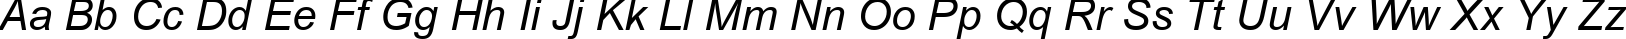 Пример написания английского алфавита шрифтом CordiaUPC Bold Italic